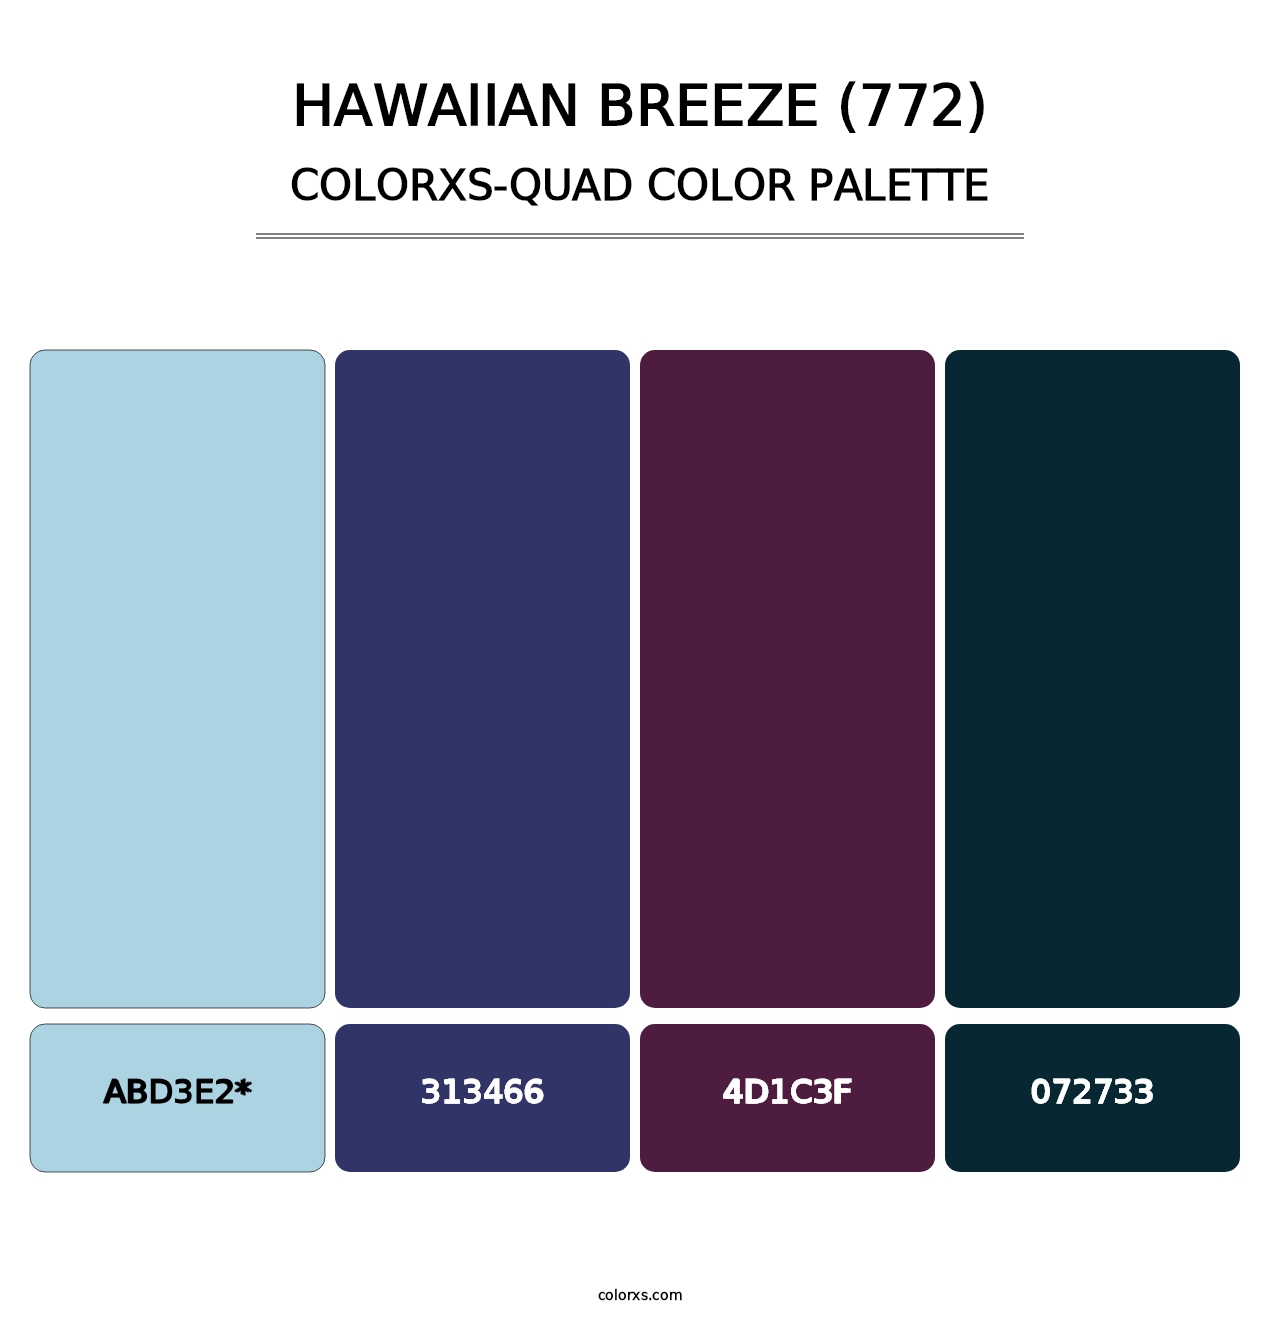 Hawaiian Breeze (772) - Colorxs Quad Palette